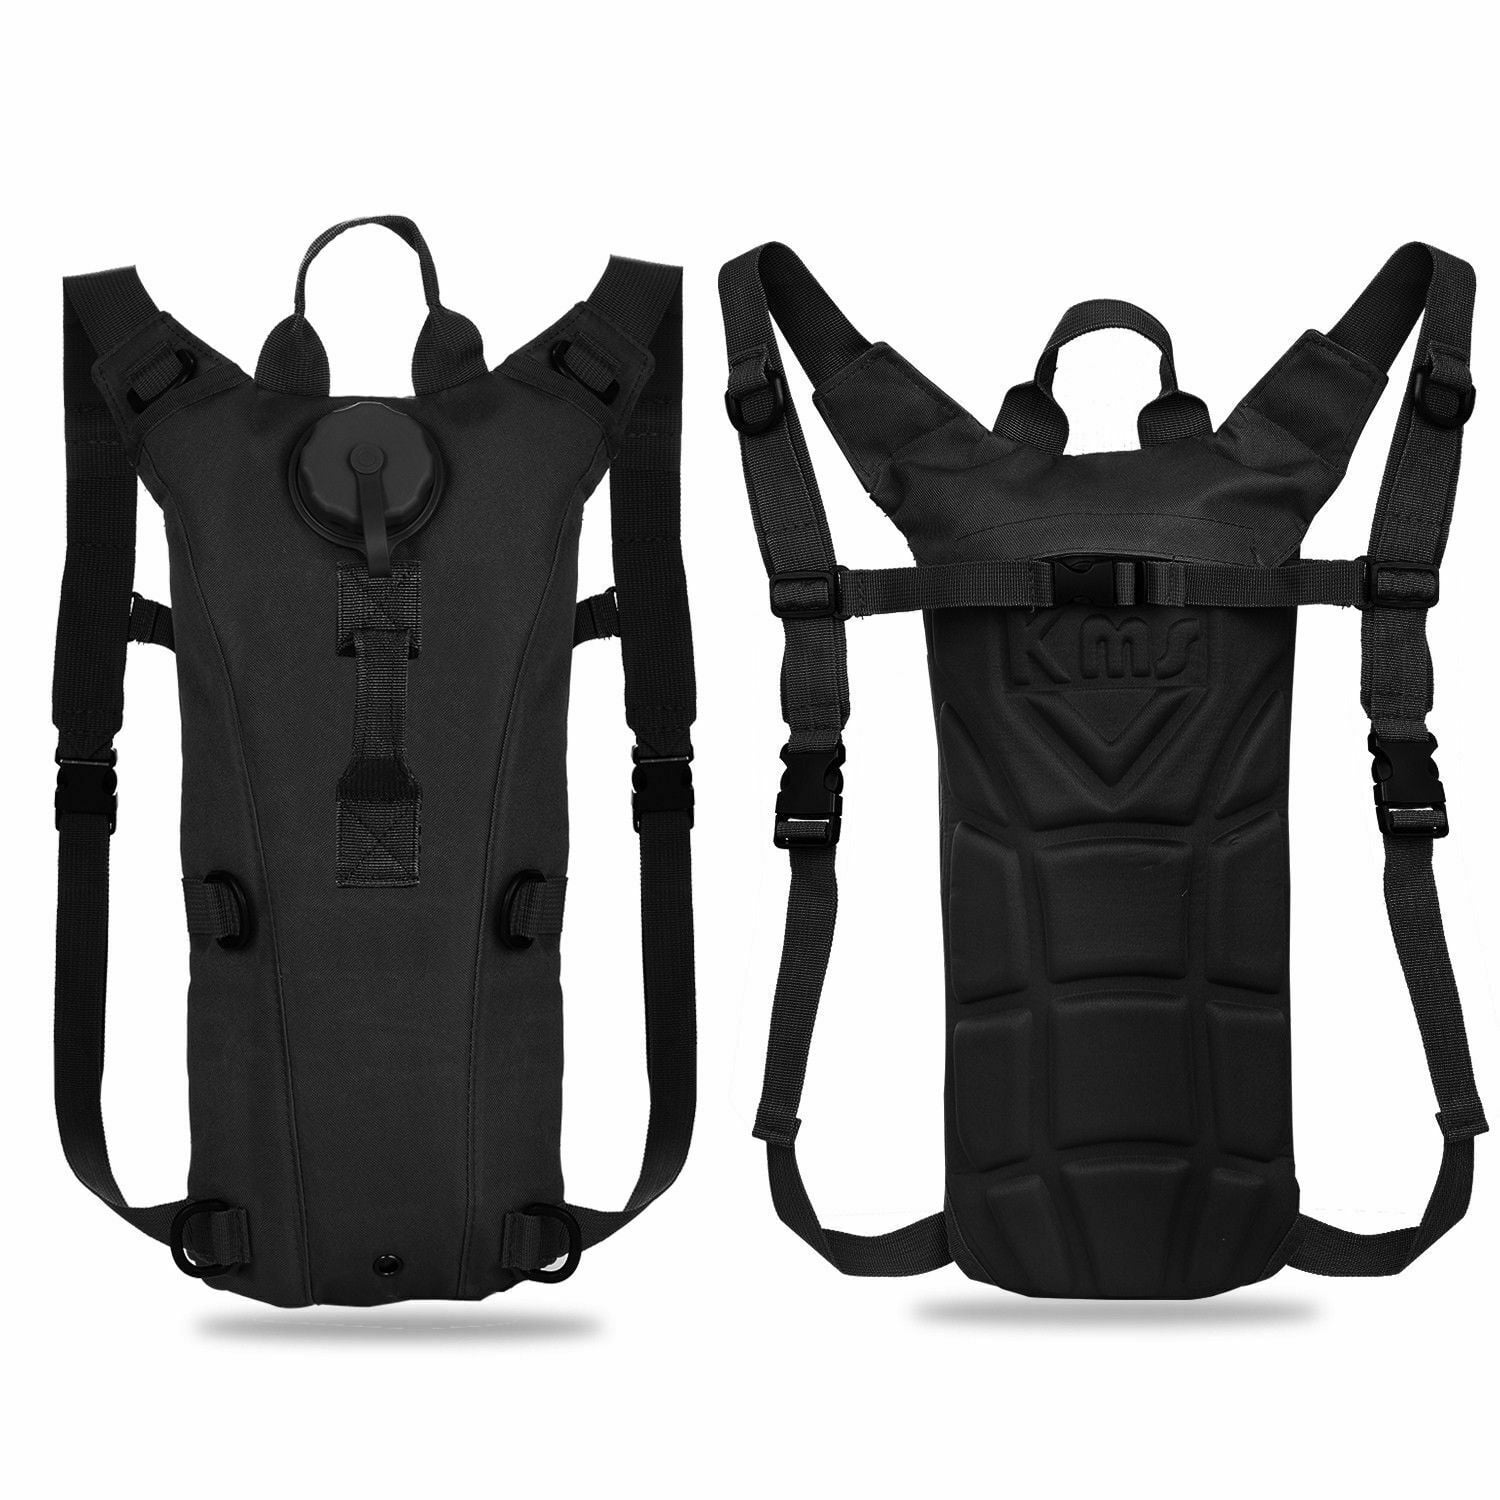 Backpack Water Bladder Bag Hydration Packs Hiking Camping Sporting SM 